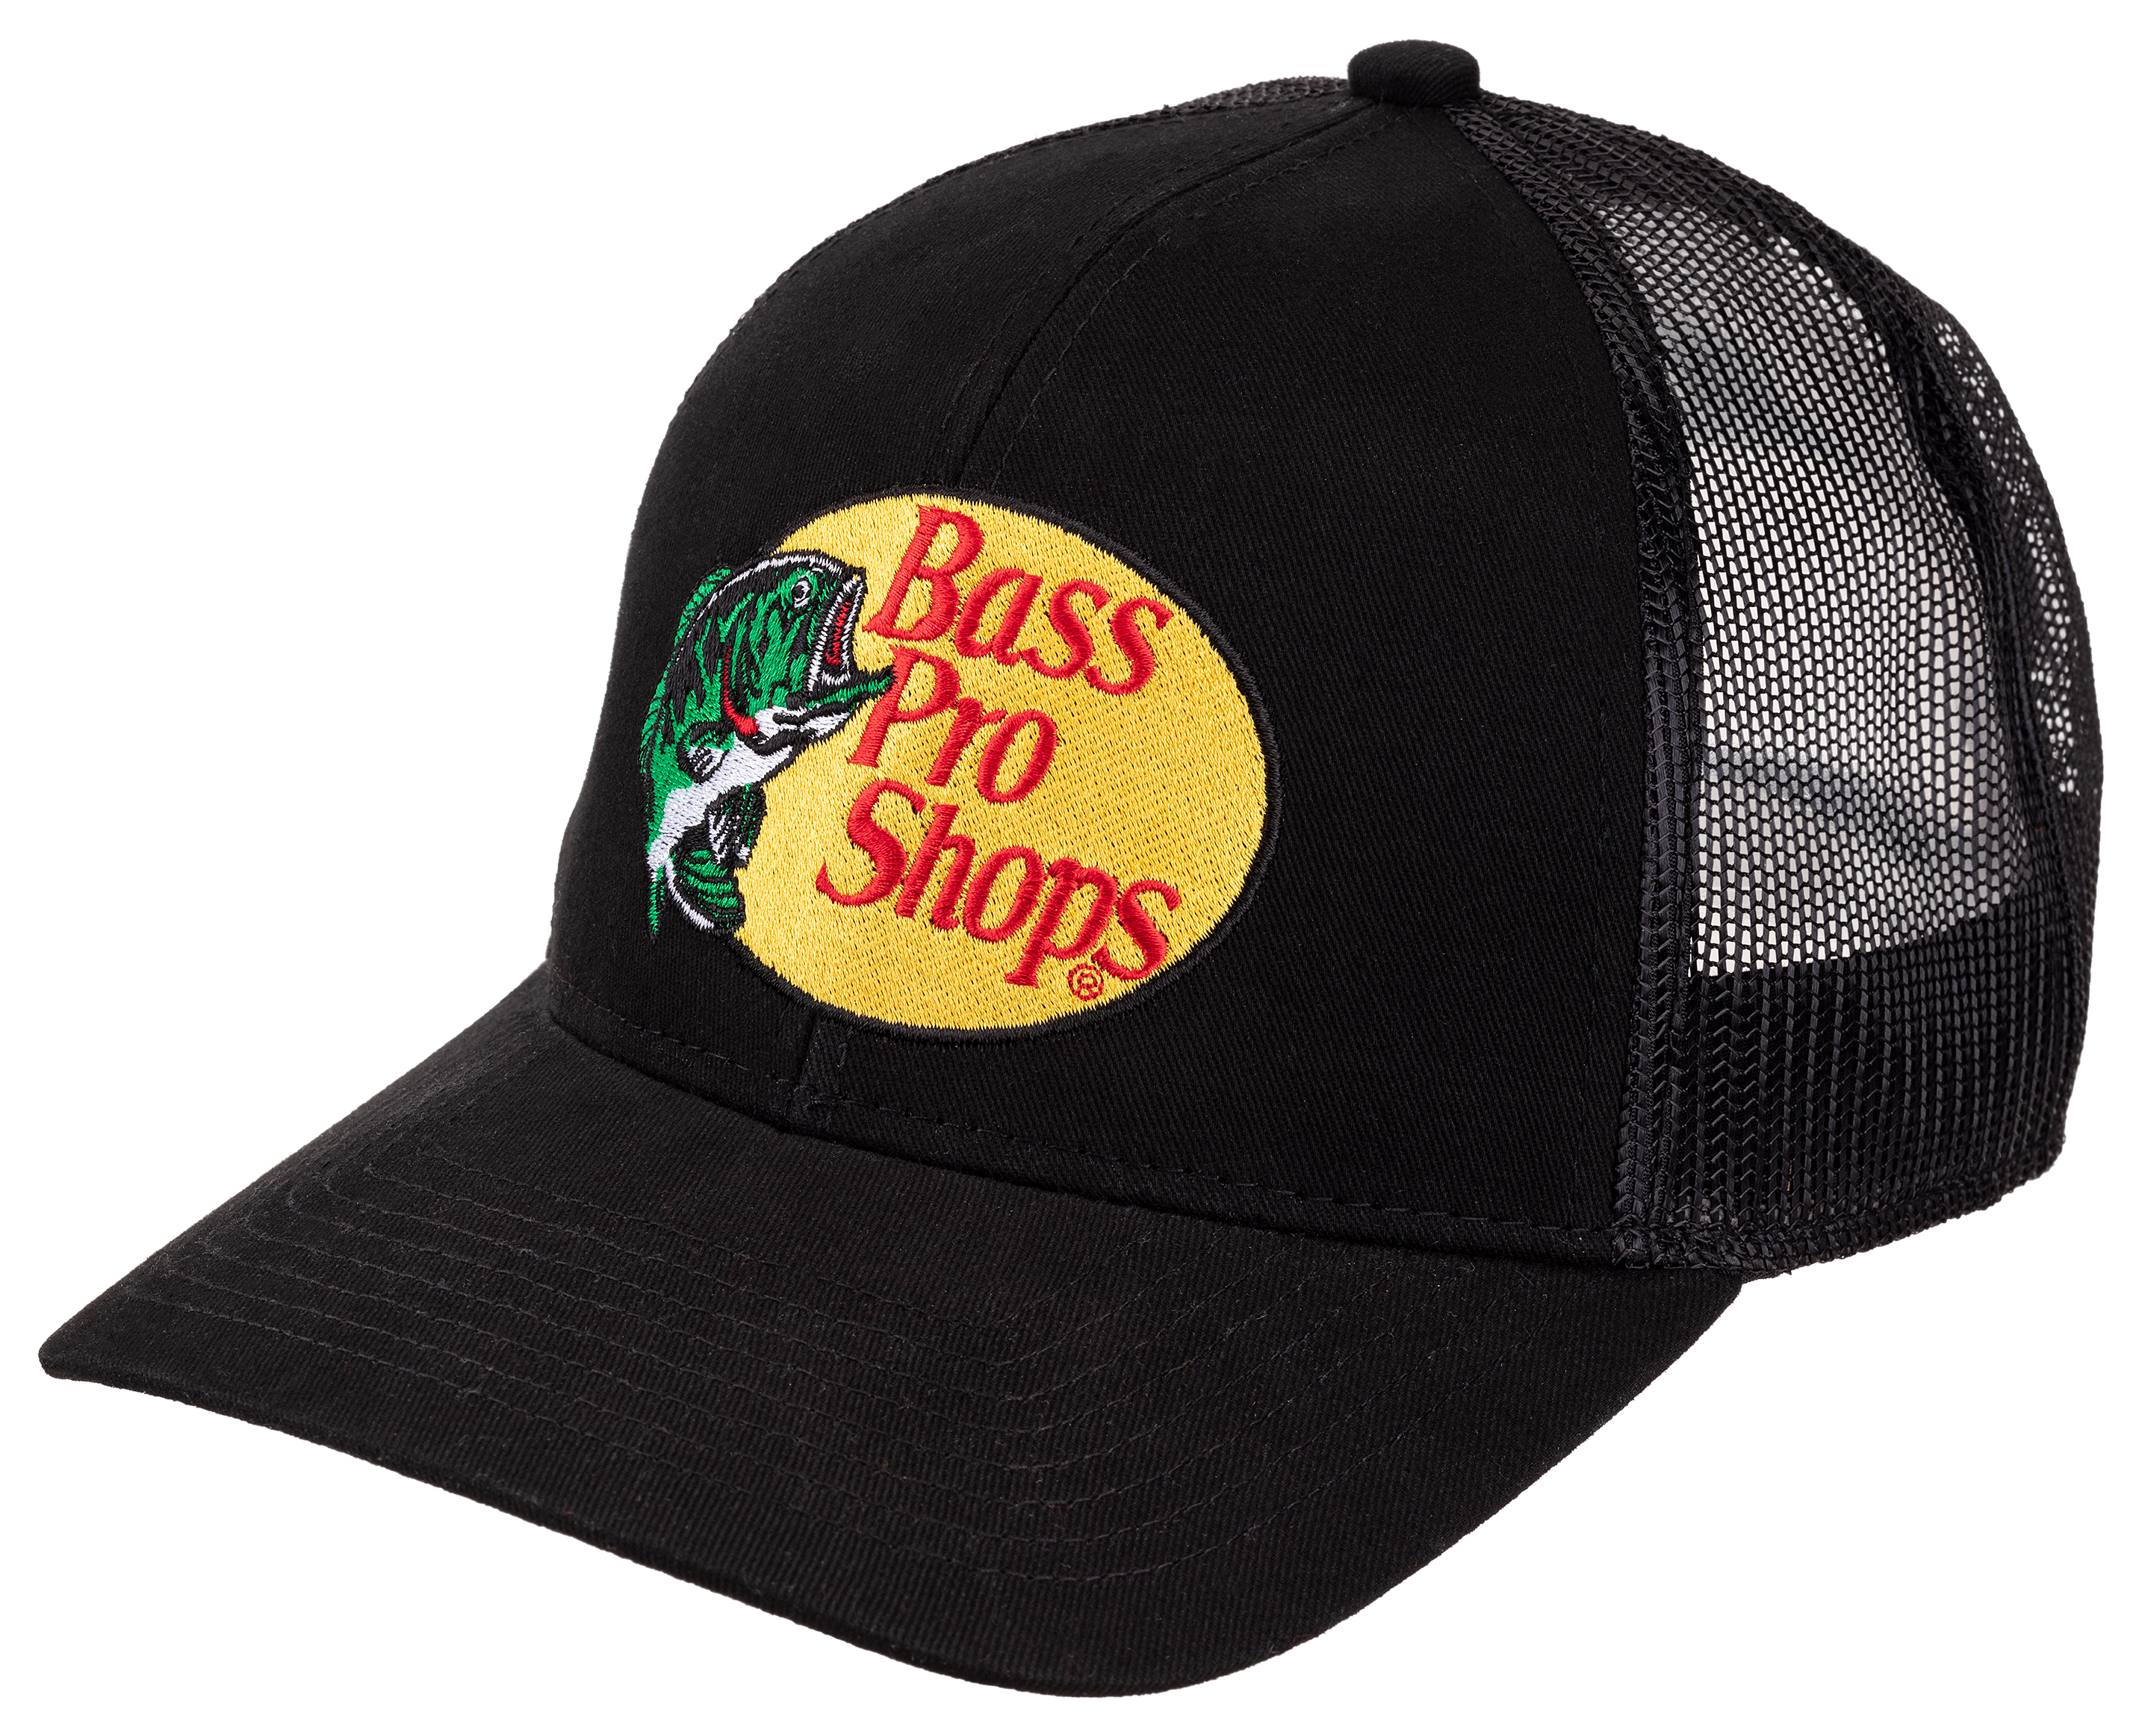 Bass Pro Shops Hat Logo Mesh Fishing Hunting Trucker Cap Snapback